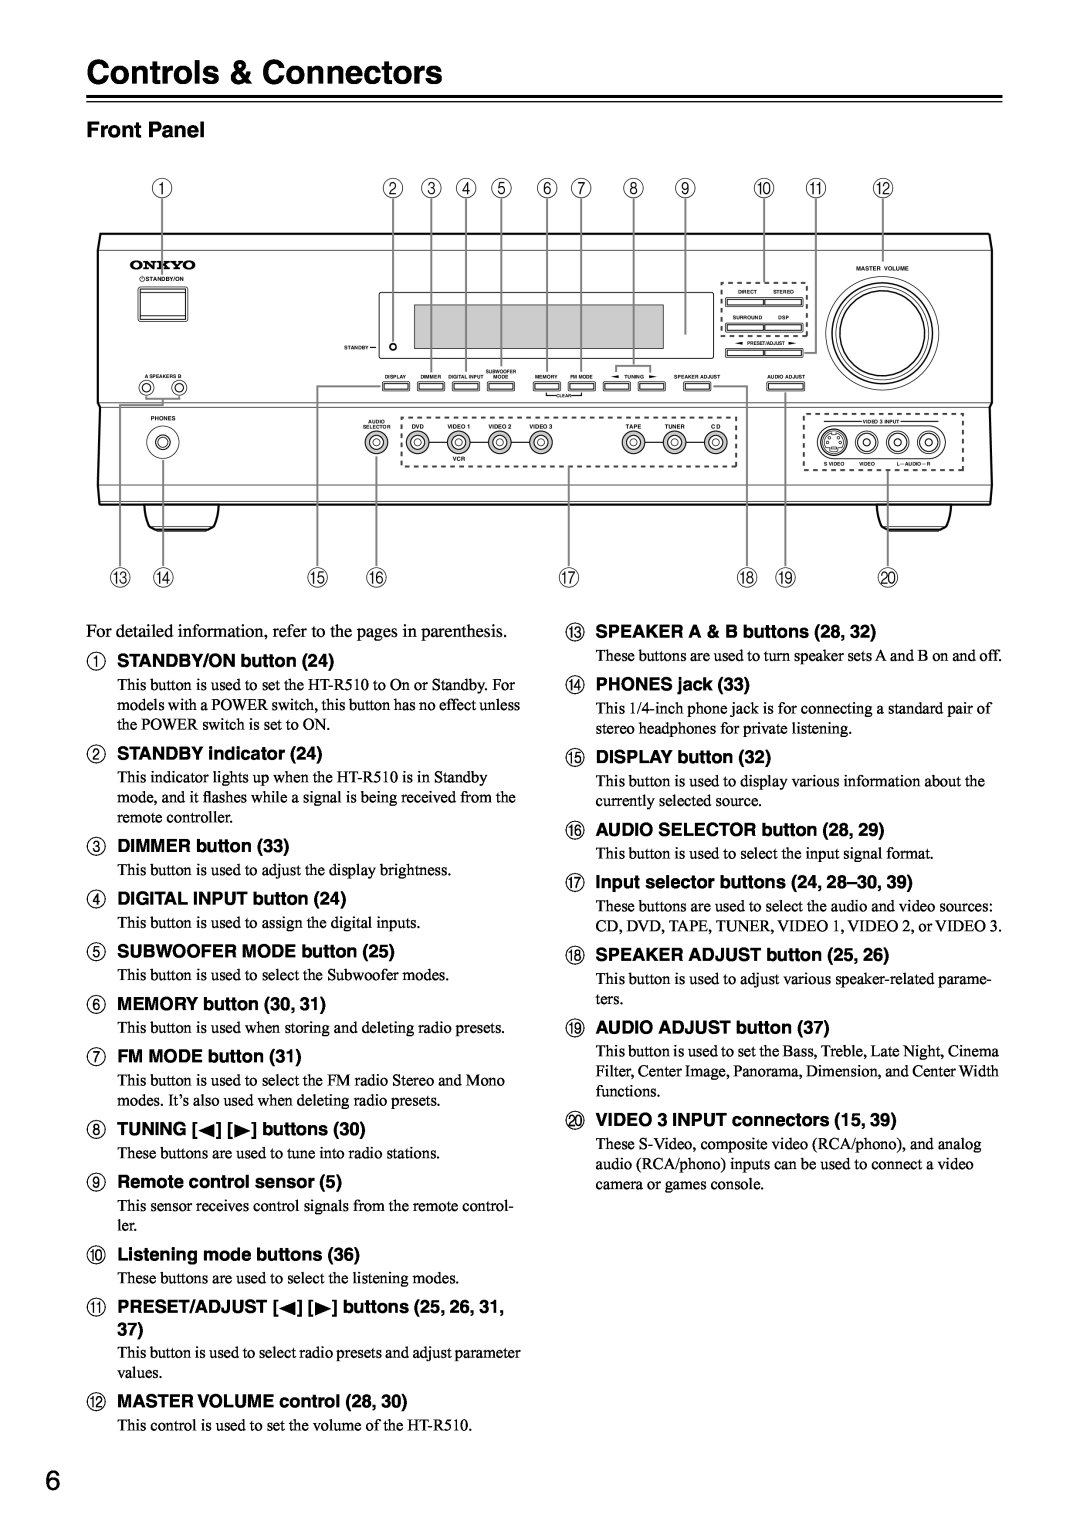 Onkyo HT-R510 instruction manual Controls & Connectors, Front Panel, 2 3 4 5 6 7 8 9 J K L 